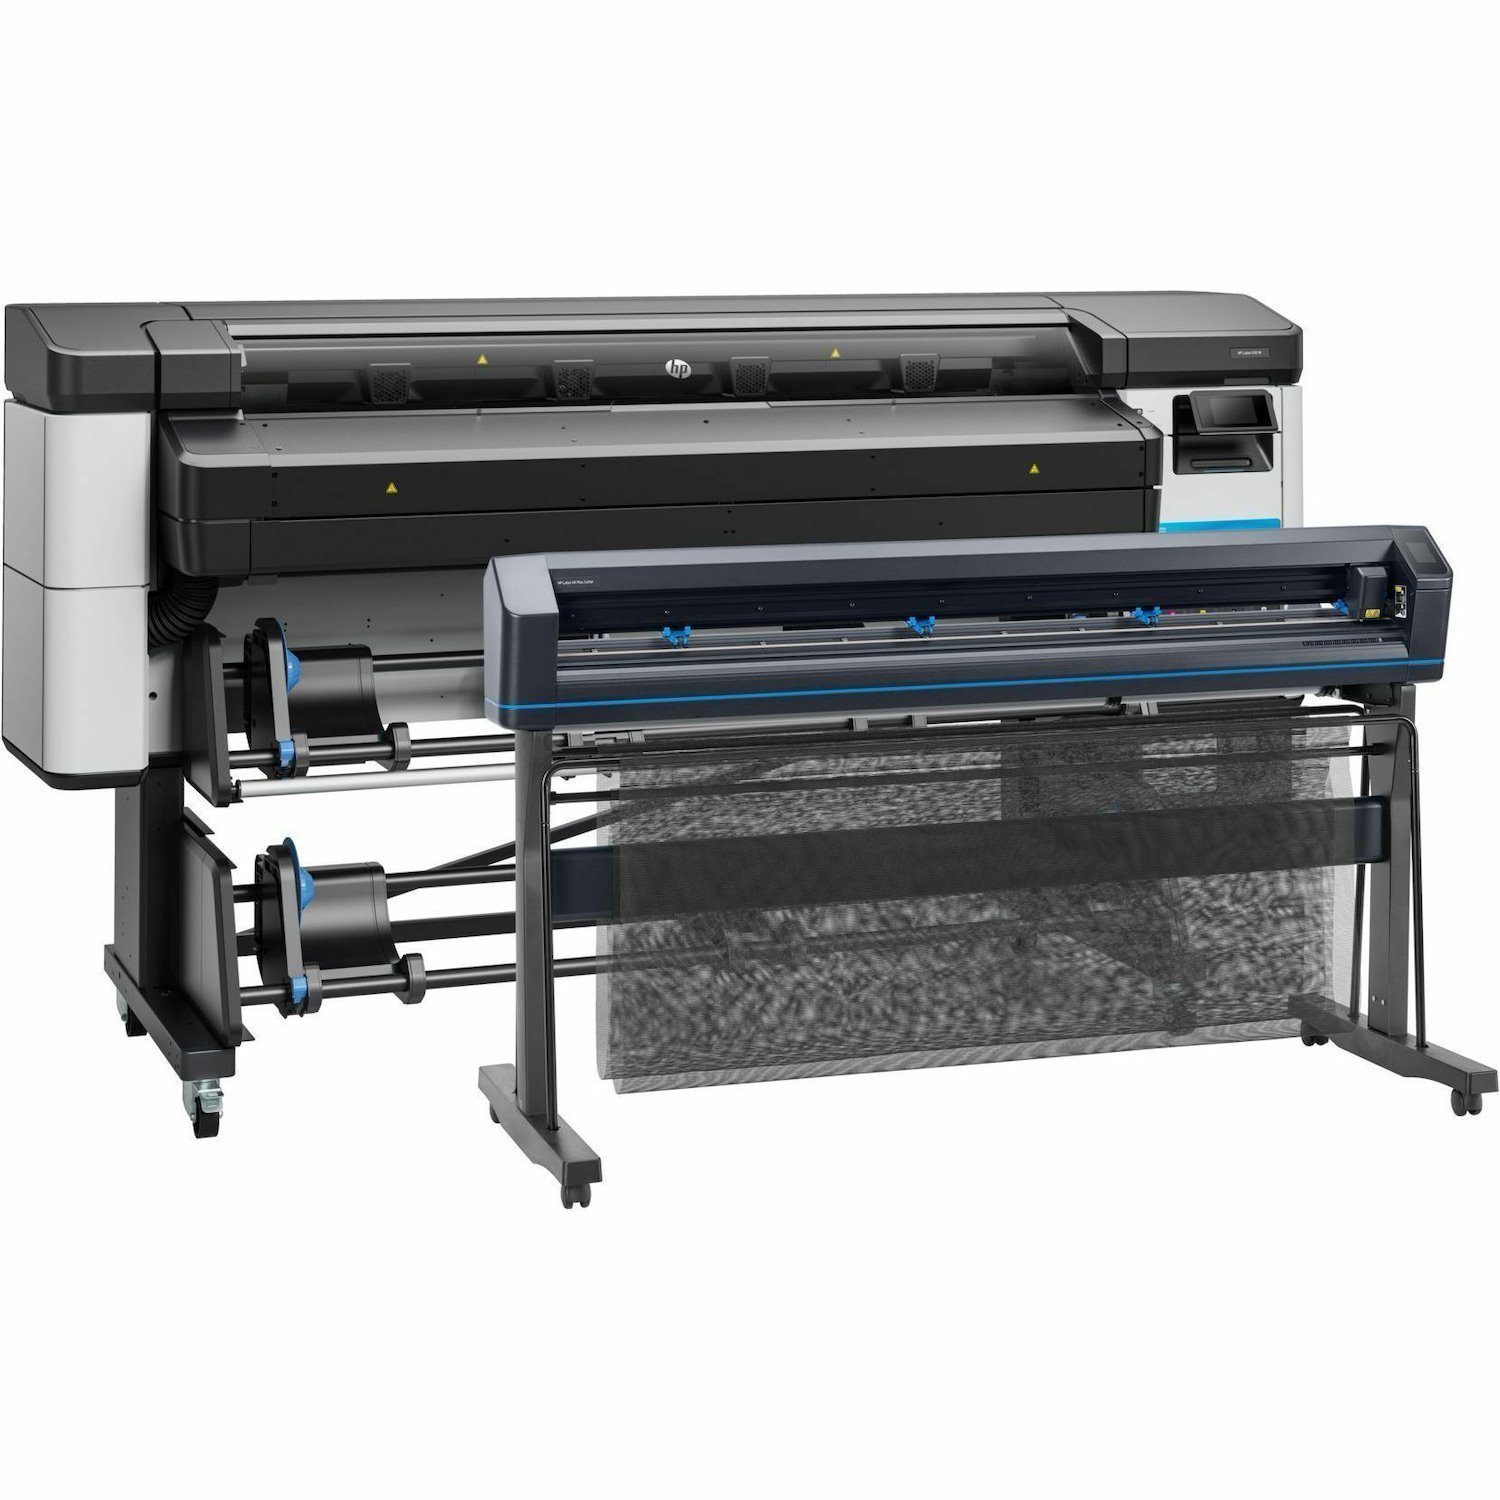 HP Latex 630 Inkjet Large Format Printer - Includes Printer, Cutter - Color